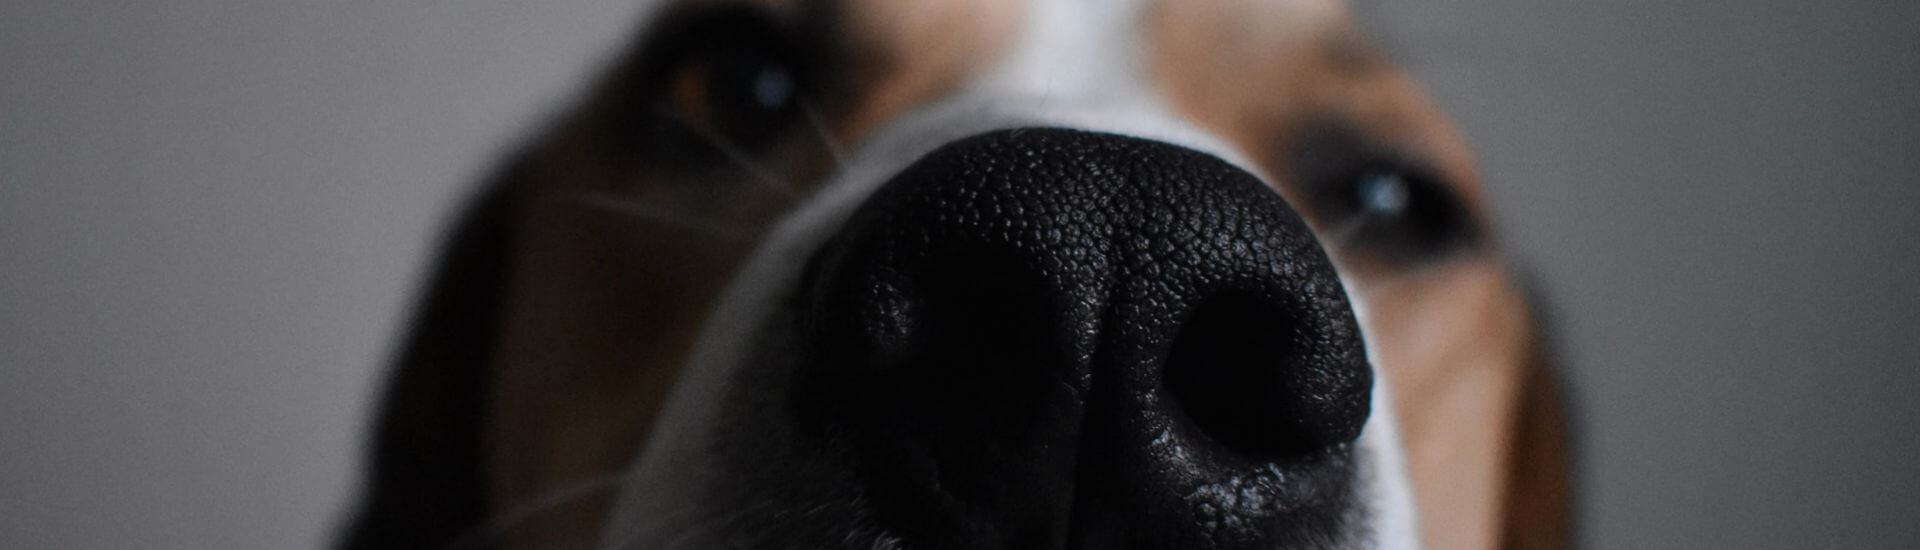 CoronaTest Hunde haben die Nase vorn DocCheck